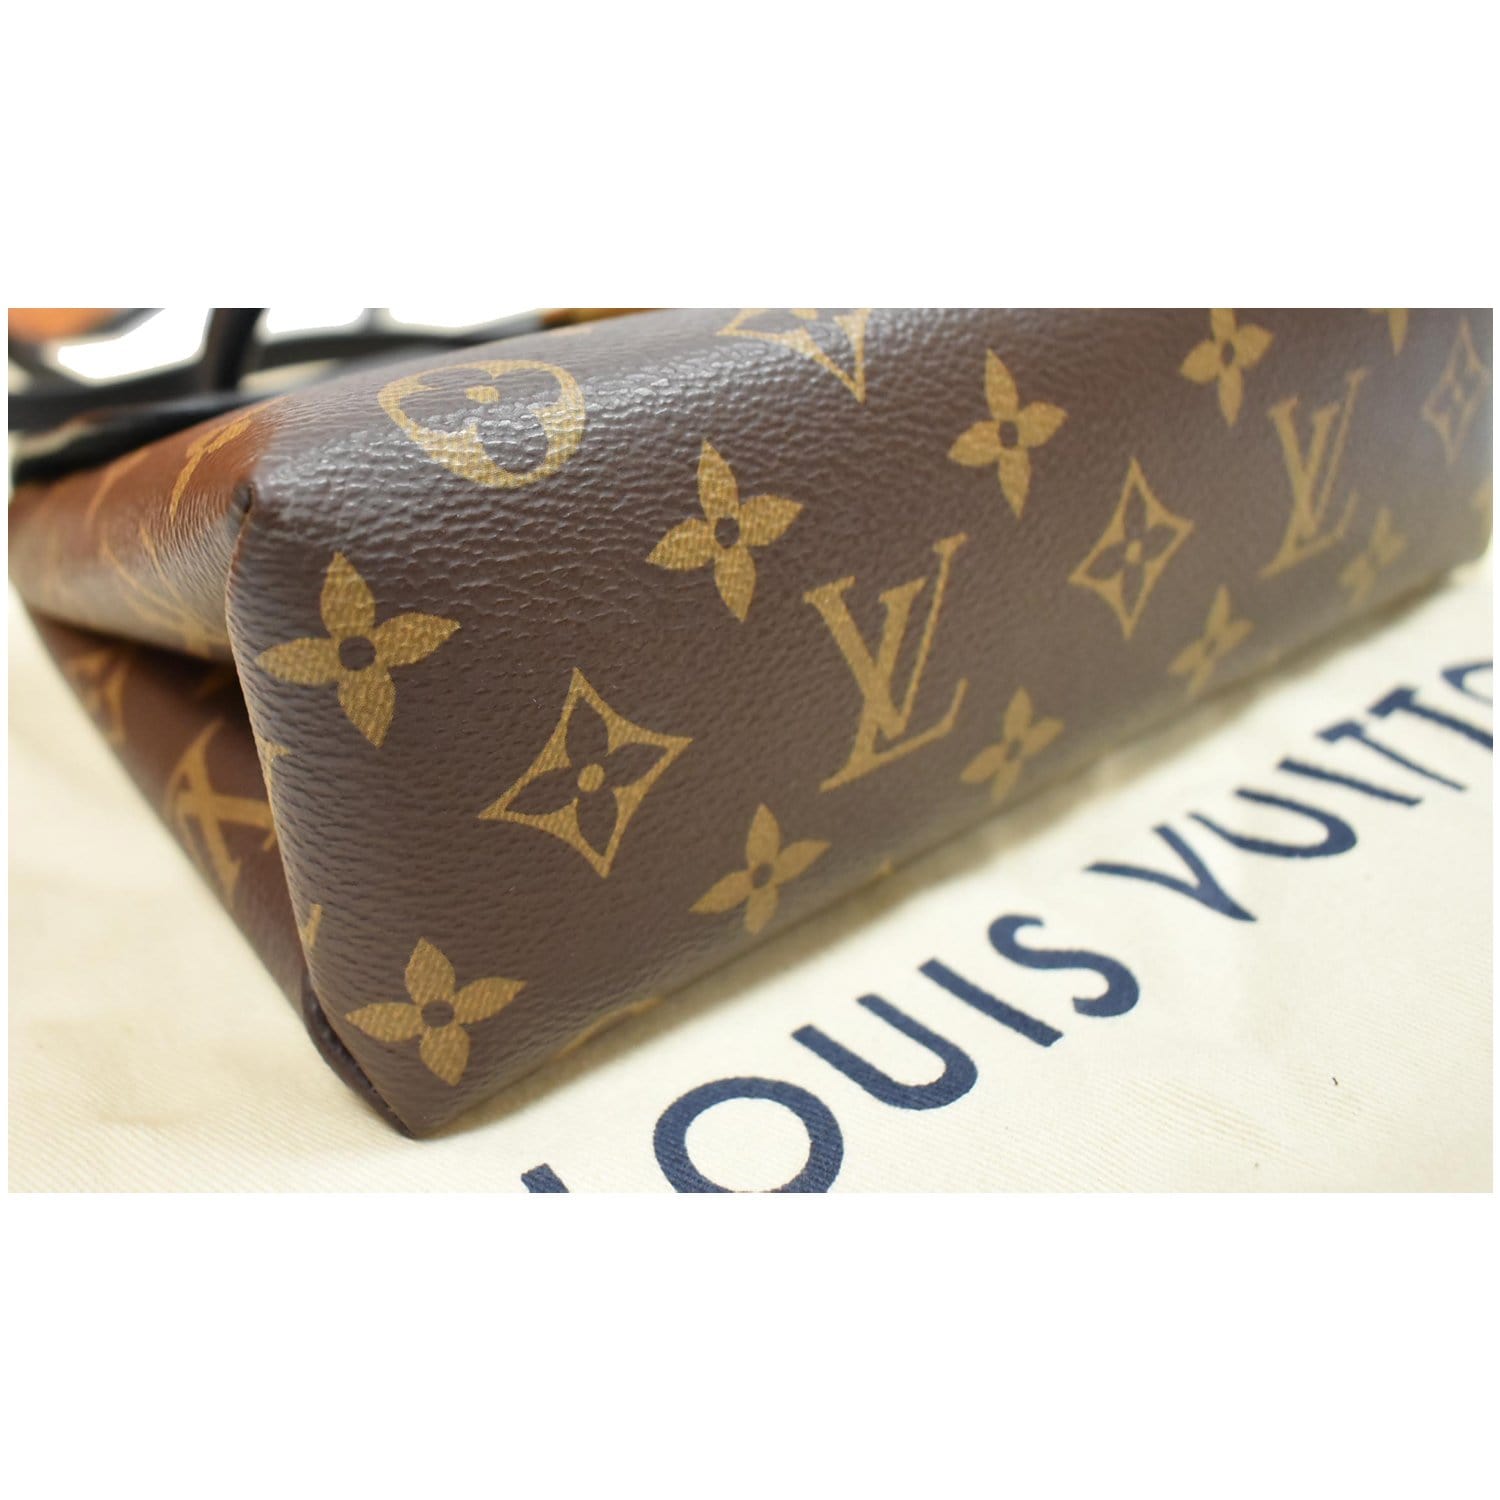 Sell Louis Vuitton Monogram Locky BB Bag - Green